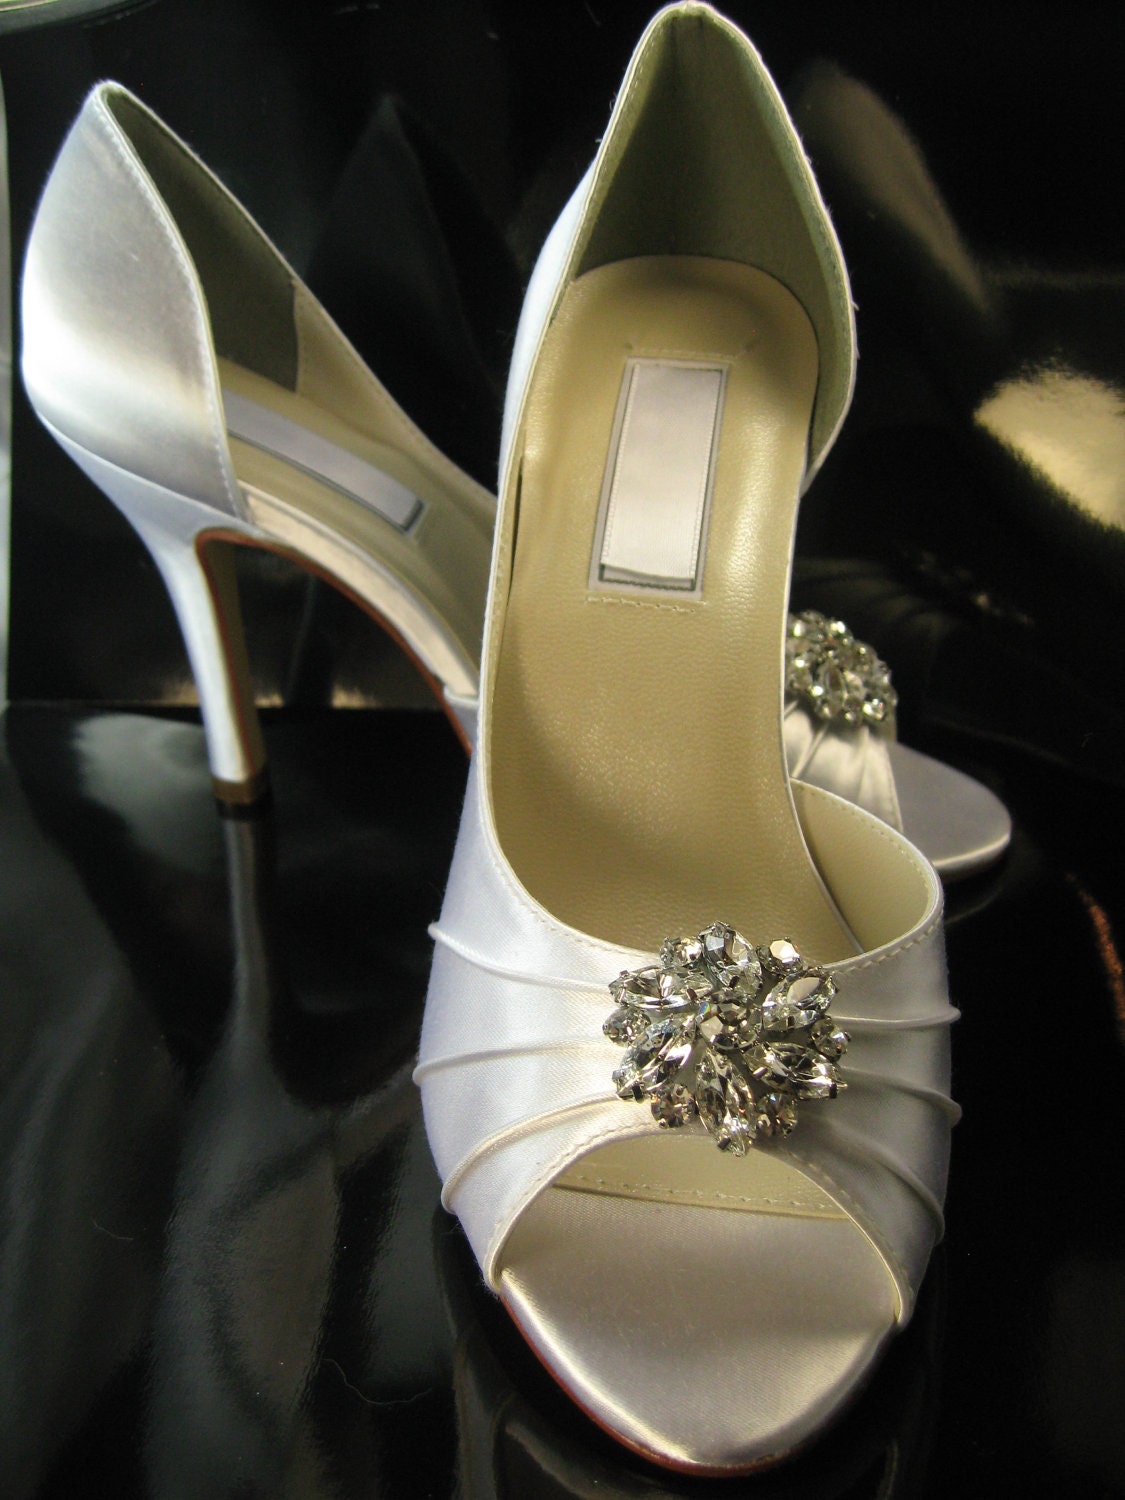 SALE Wedding Shoes Bridal Shoes White Satin or Ivory Satin